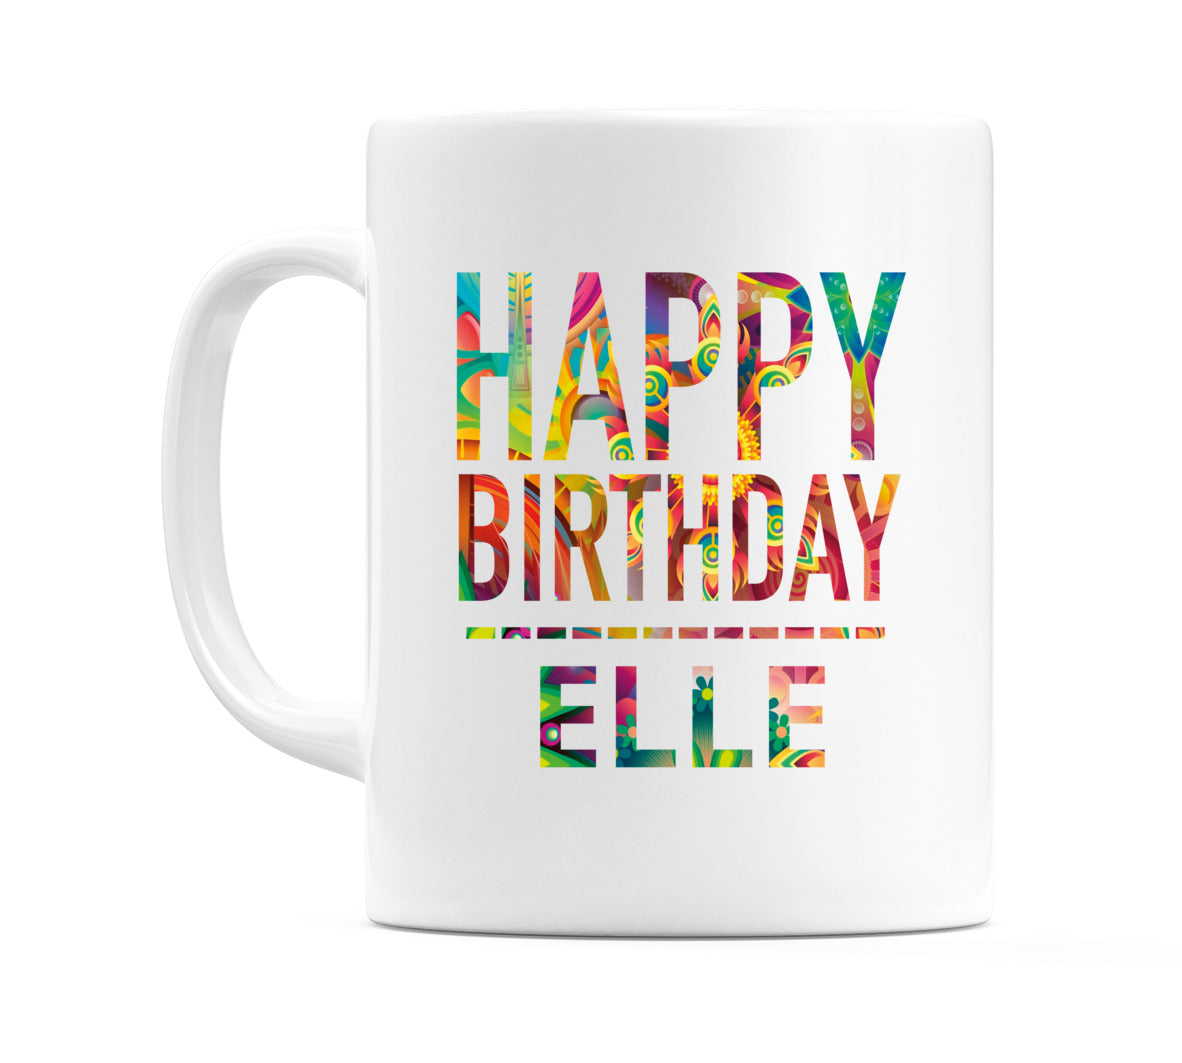 Happy Birthday Elle (Tie Dye Effect) Mug Cup by WeDoMugs